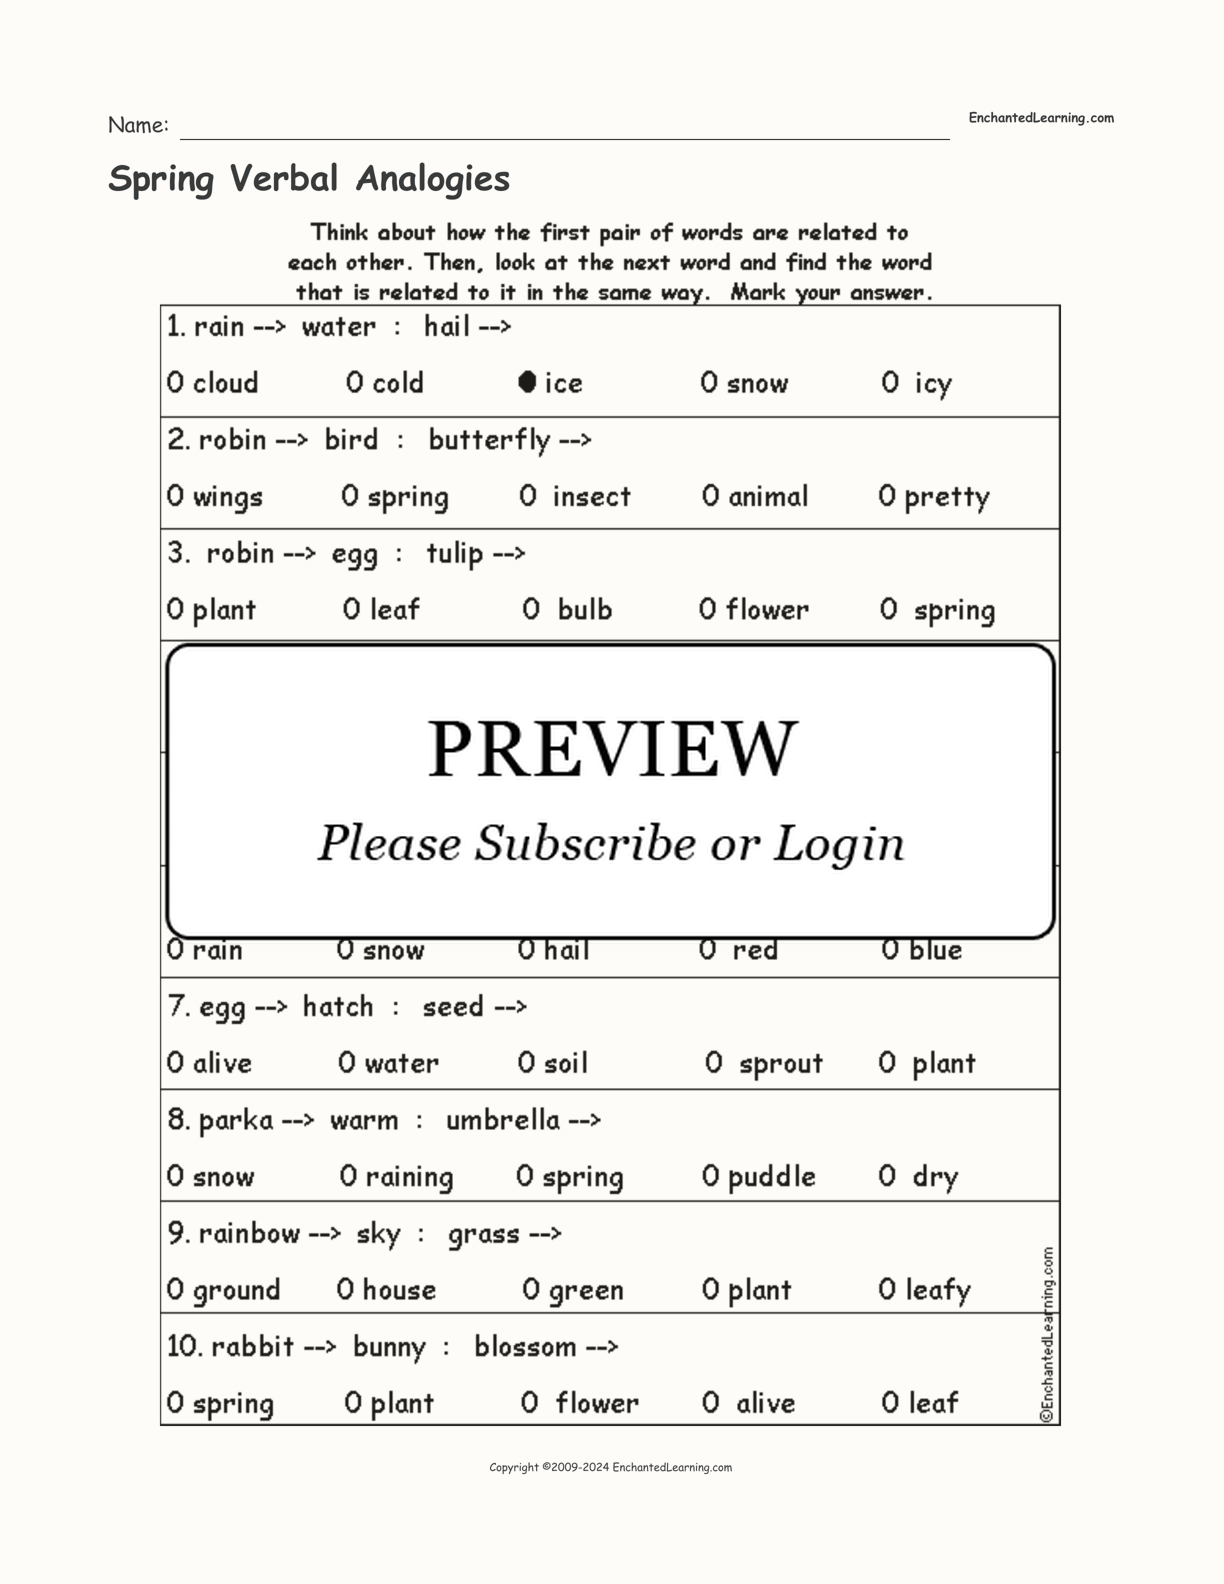 Spring Verbal Analogies interactive worksheet page 1